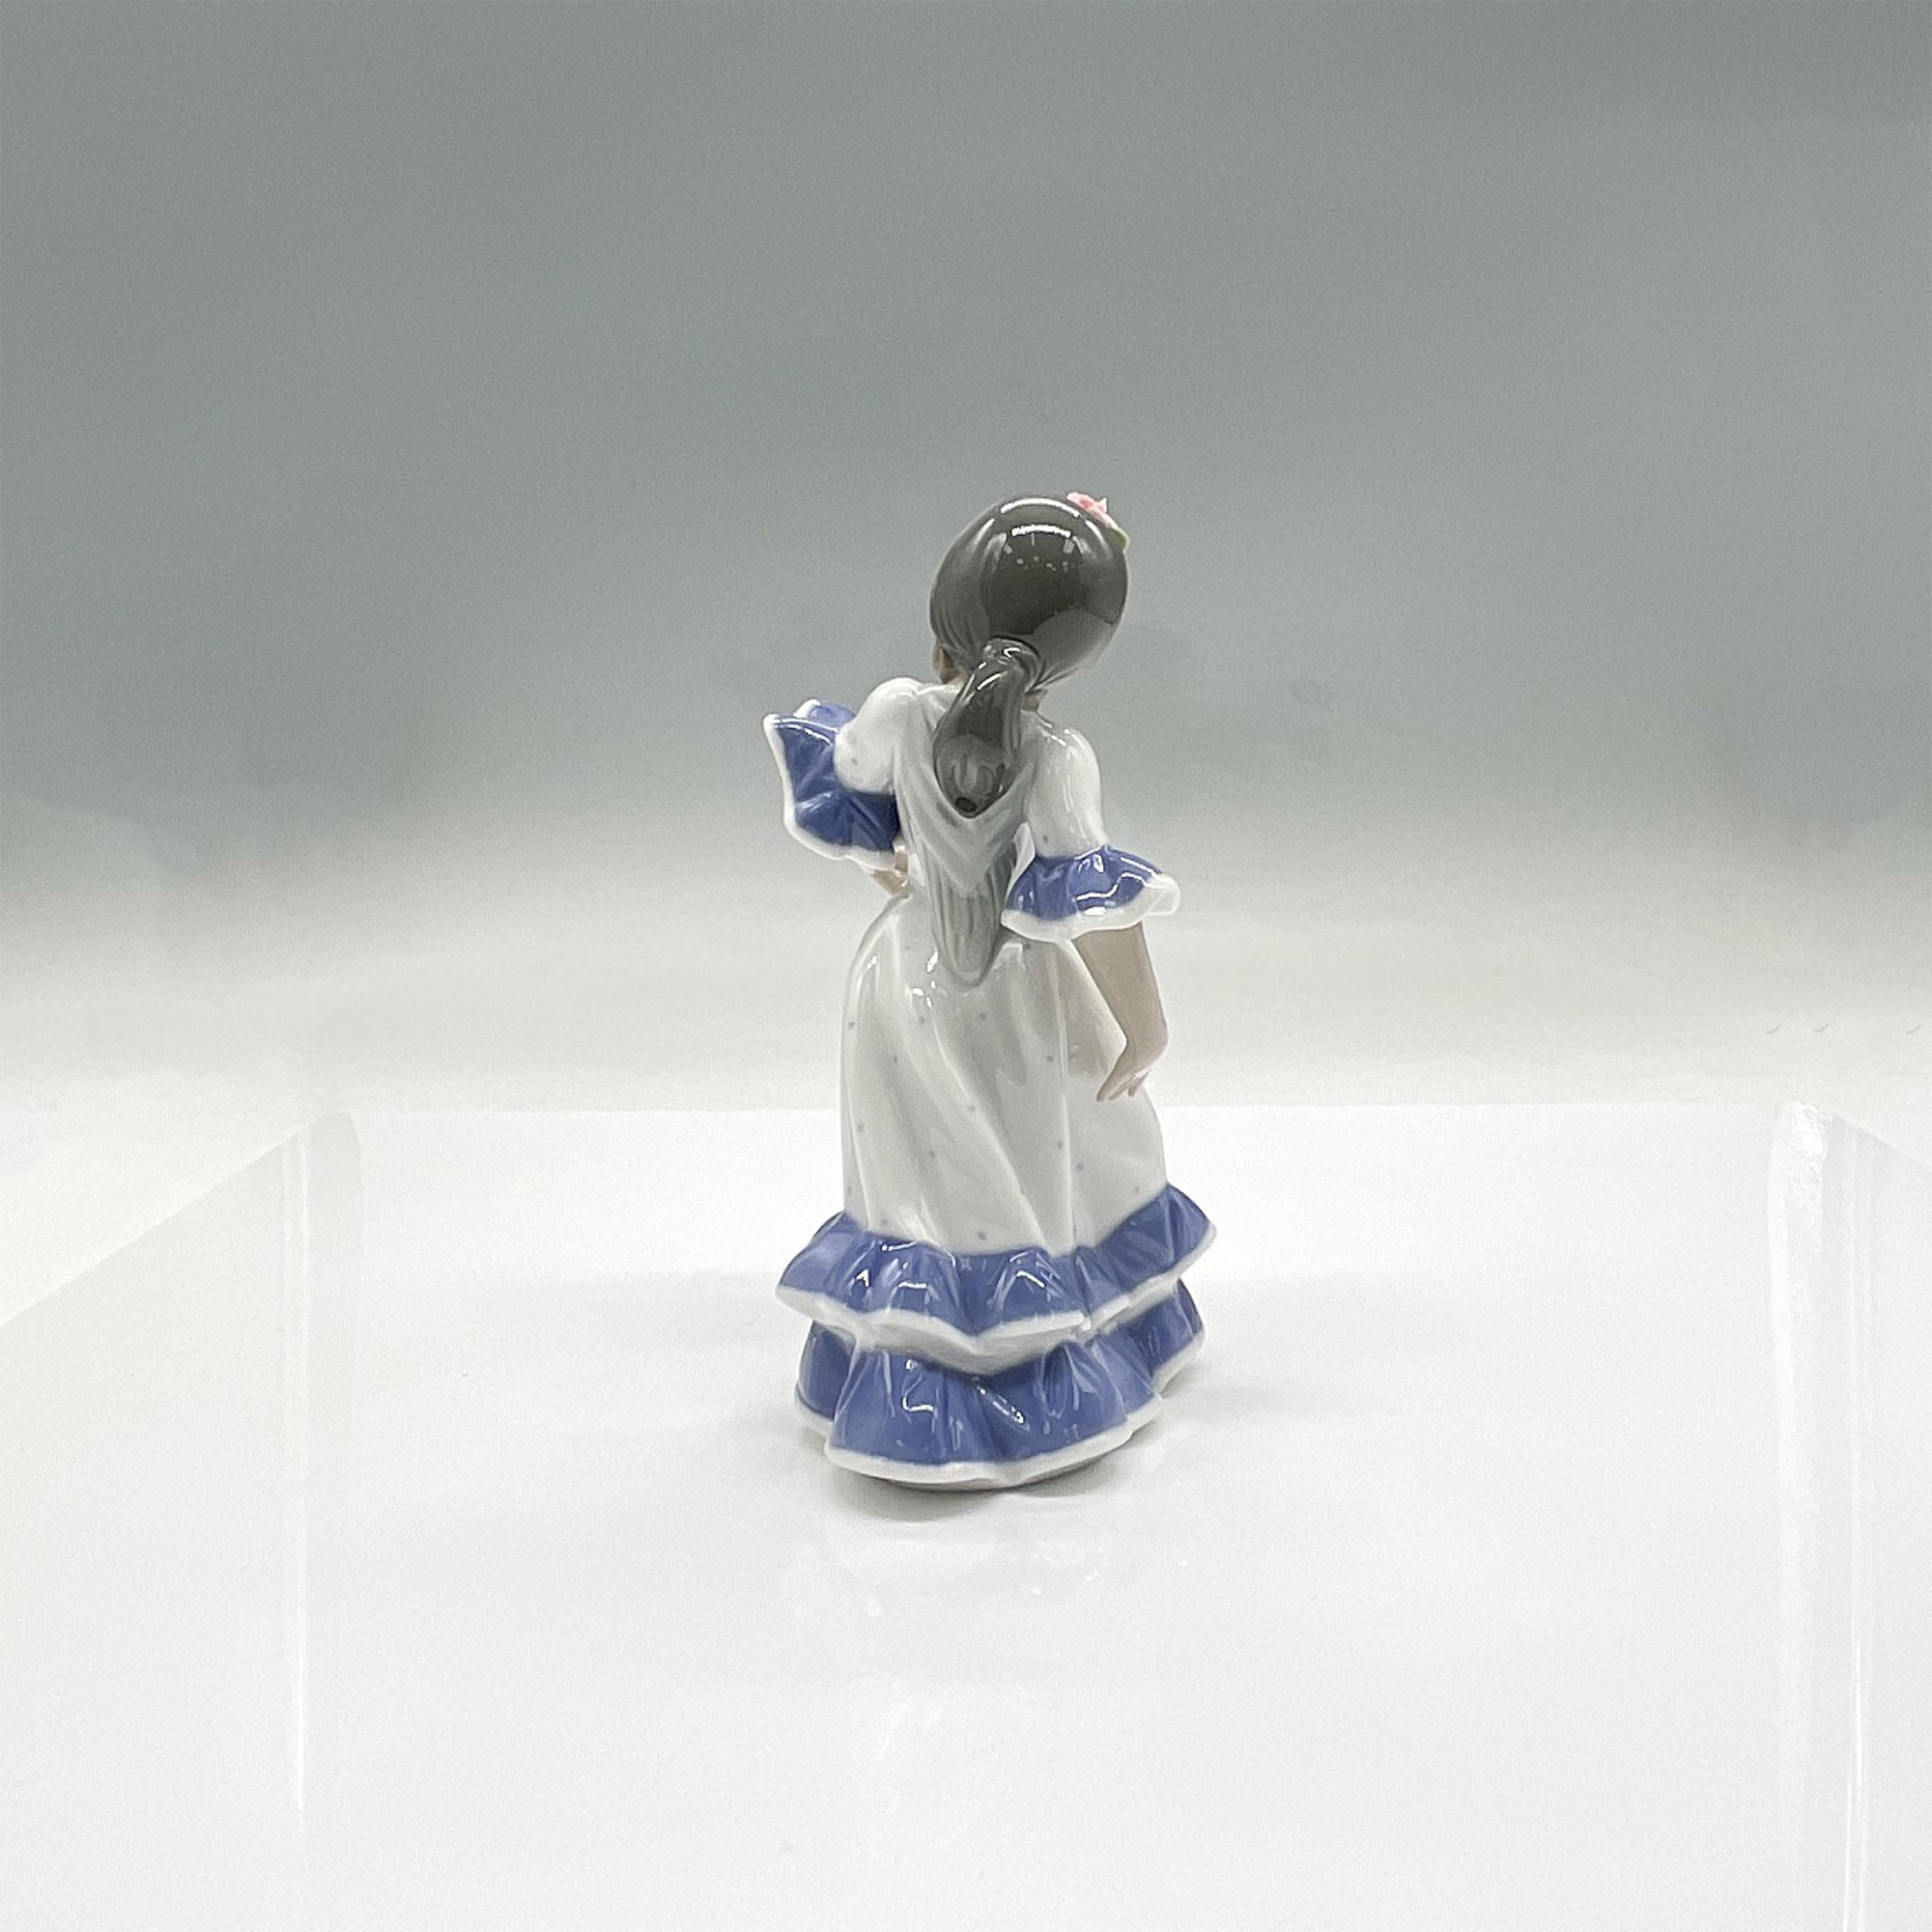 Juanita 1005193 - Lladro Porcelain Figurine - Image 2 of 4